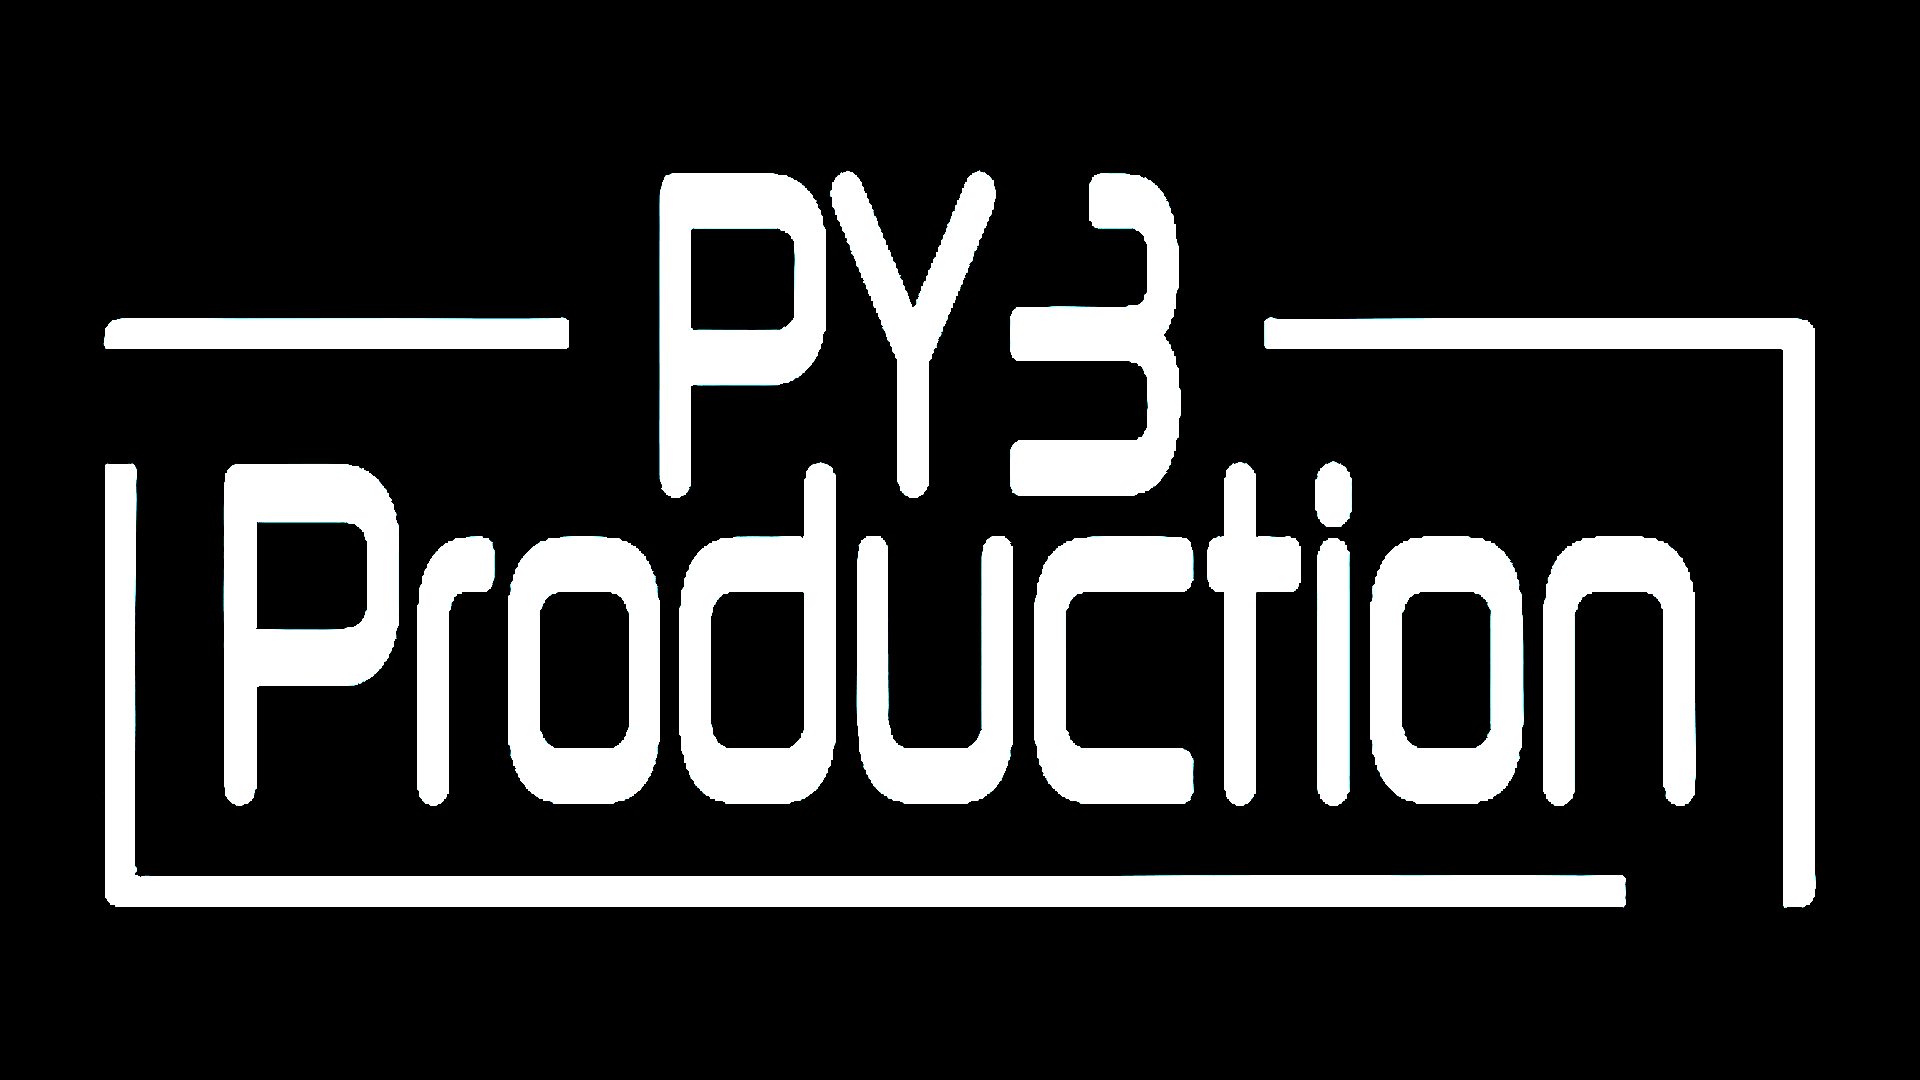 PY3 Production